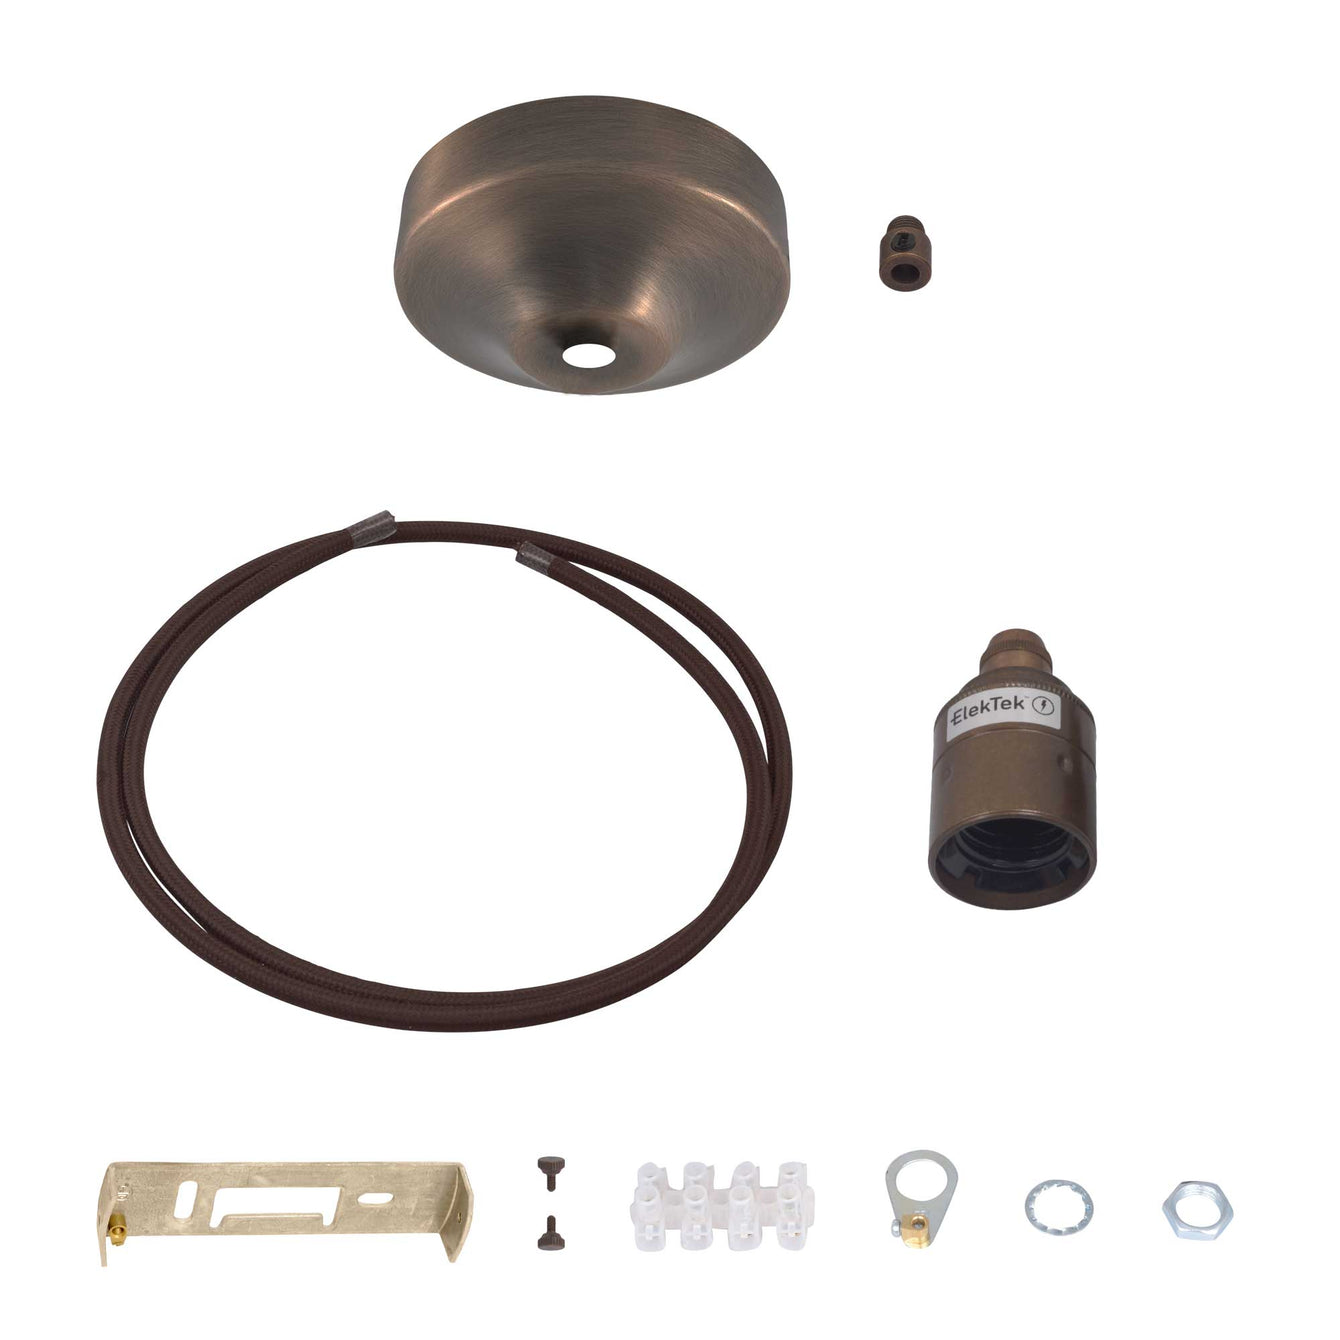 ElekTek Premium Pendant Light Kit DIY 100mm Convex Ceiling Rose, Round Flex and Lamp Holder E27 Plain Cord Grip - Buy It Better Nickel